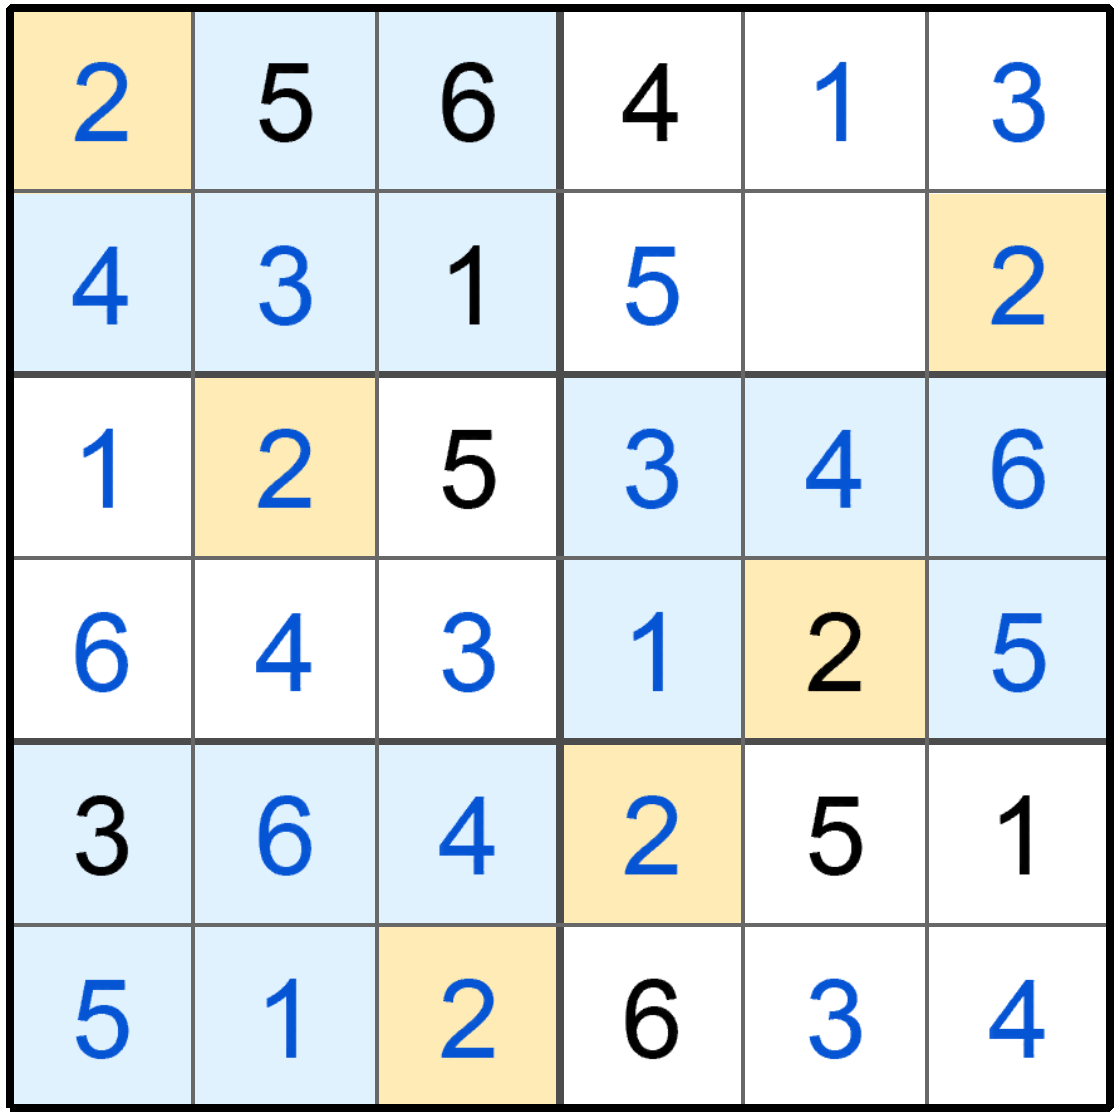 Puzzle Page Sudoku June 24 2019 Answers PuzzlePageAnswers net